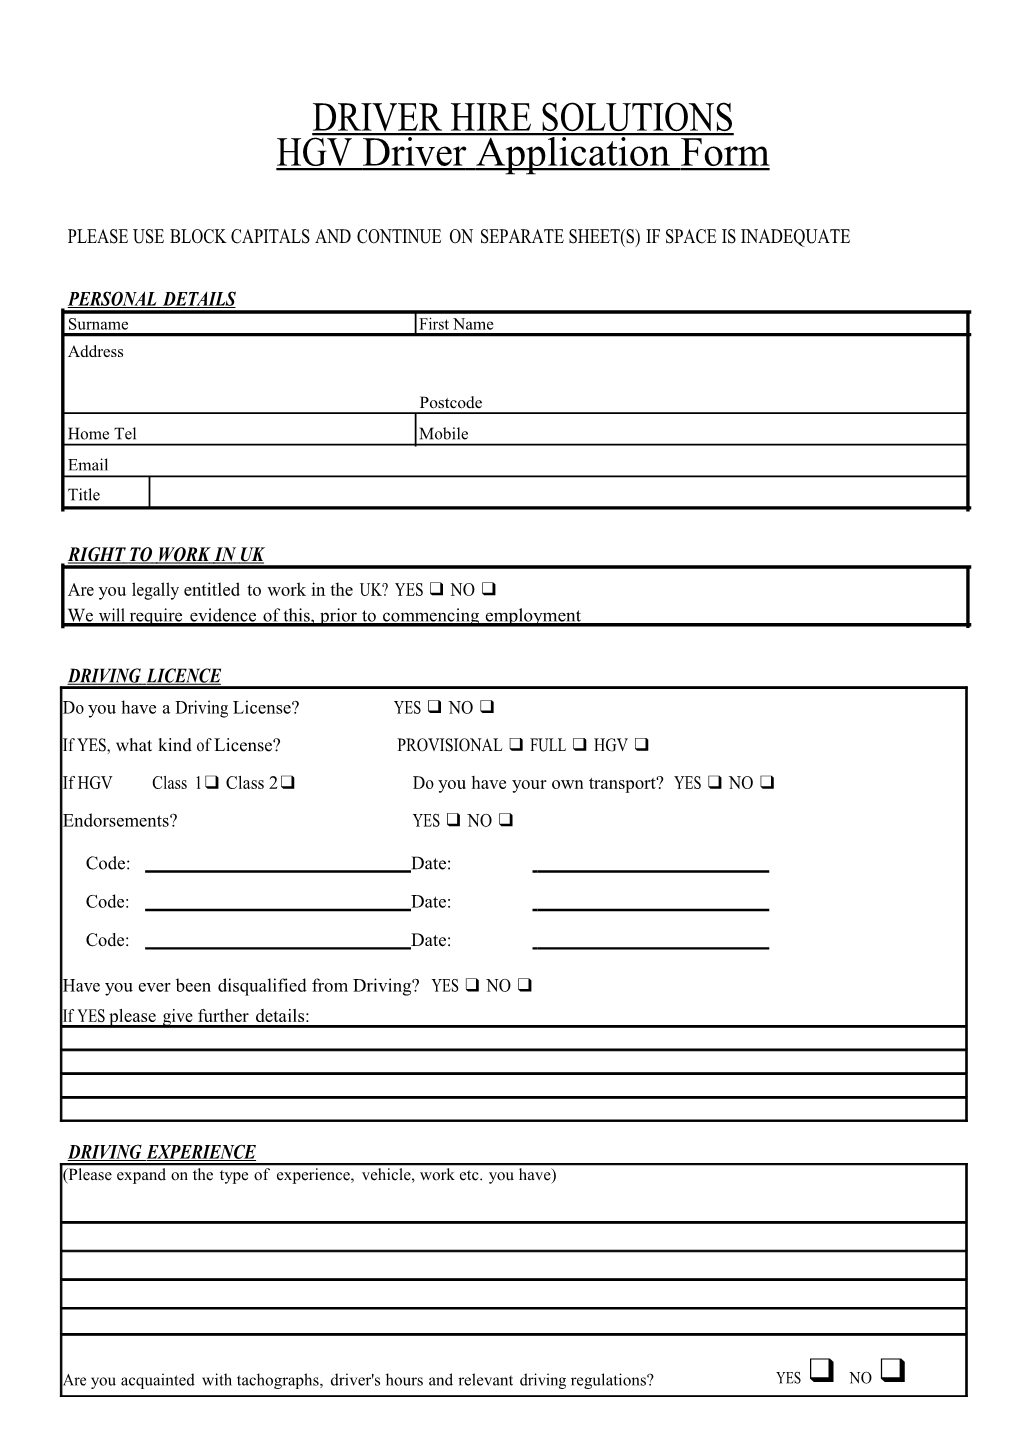 HGV Driver Application Form 2012 Template.Xls